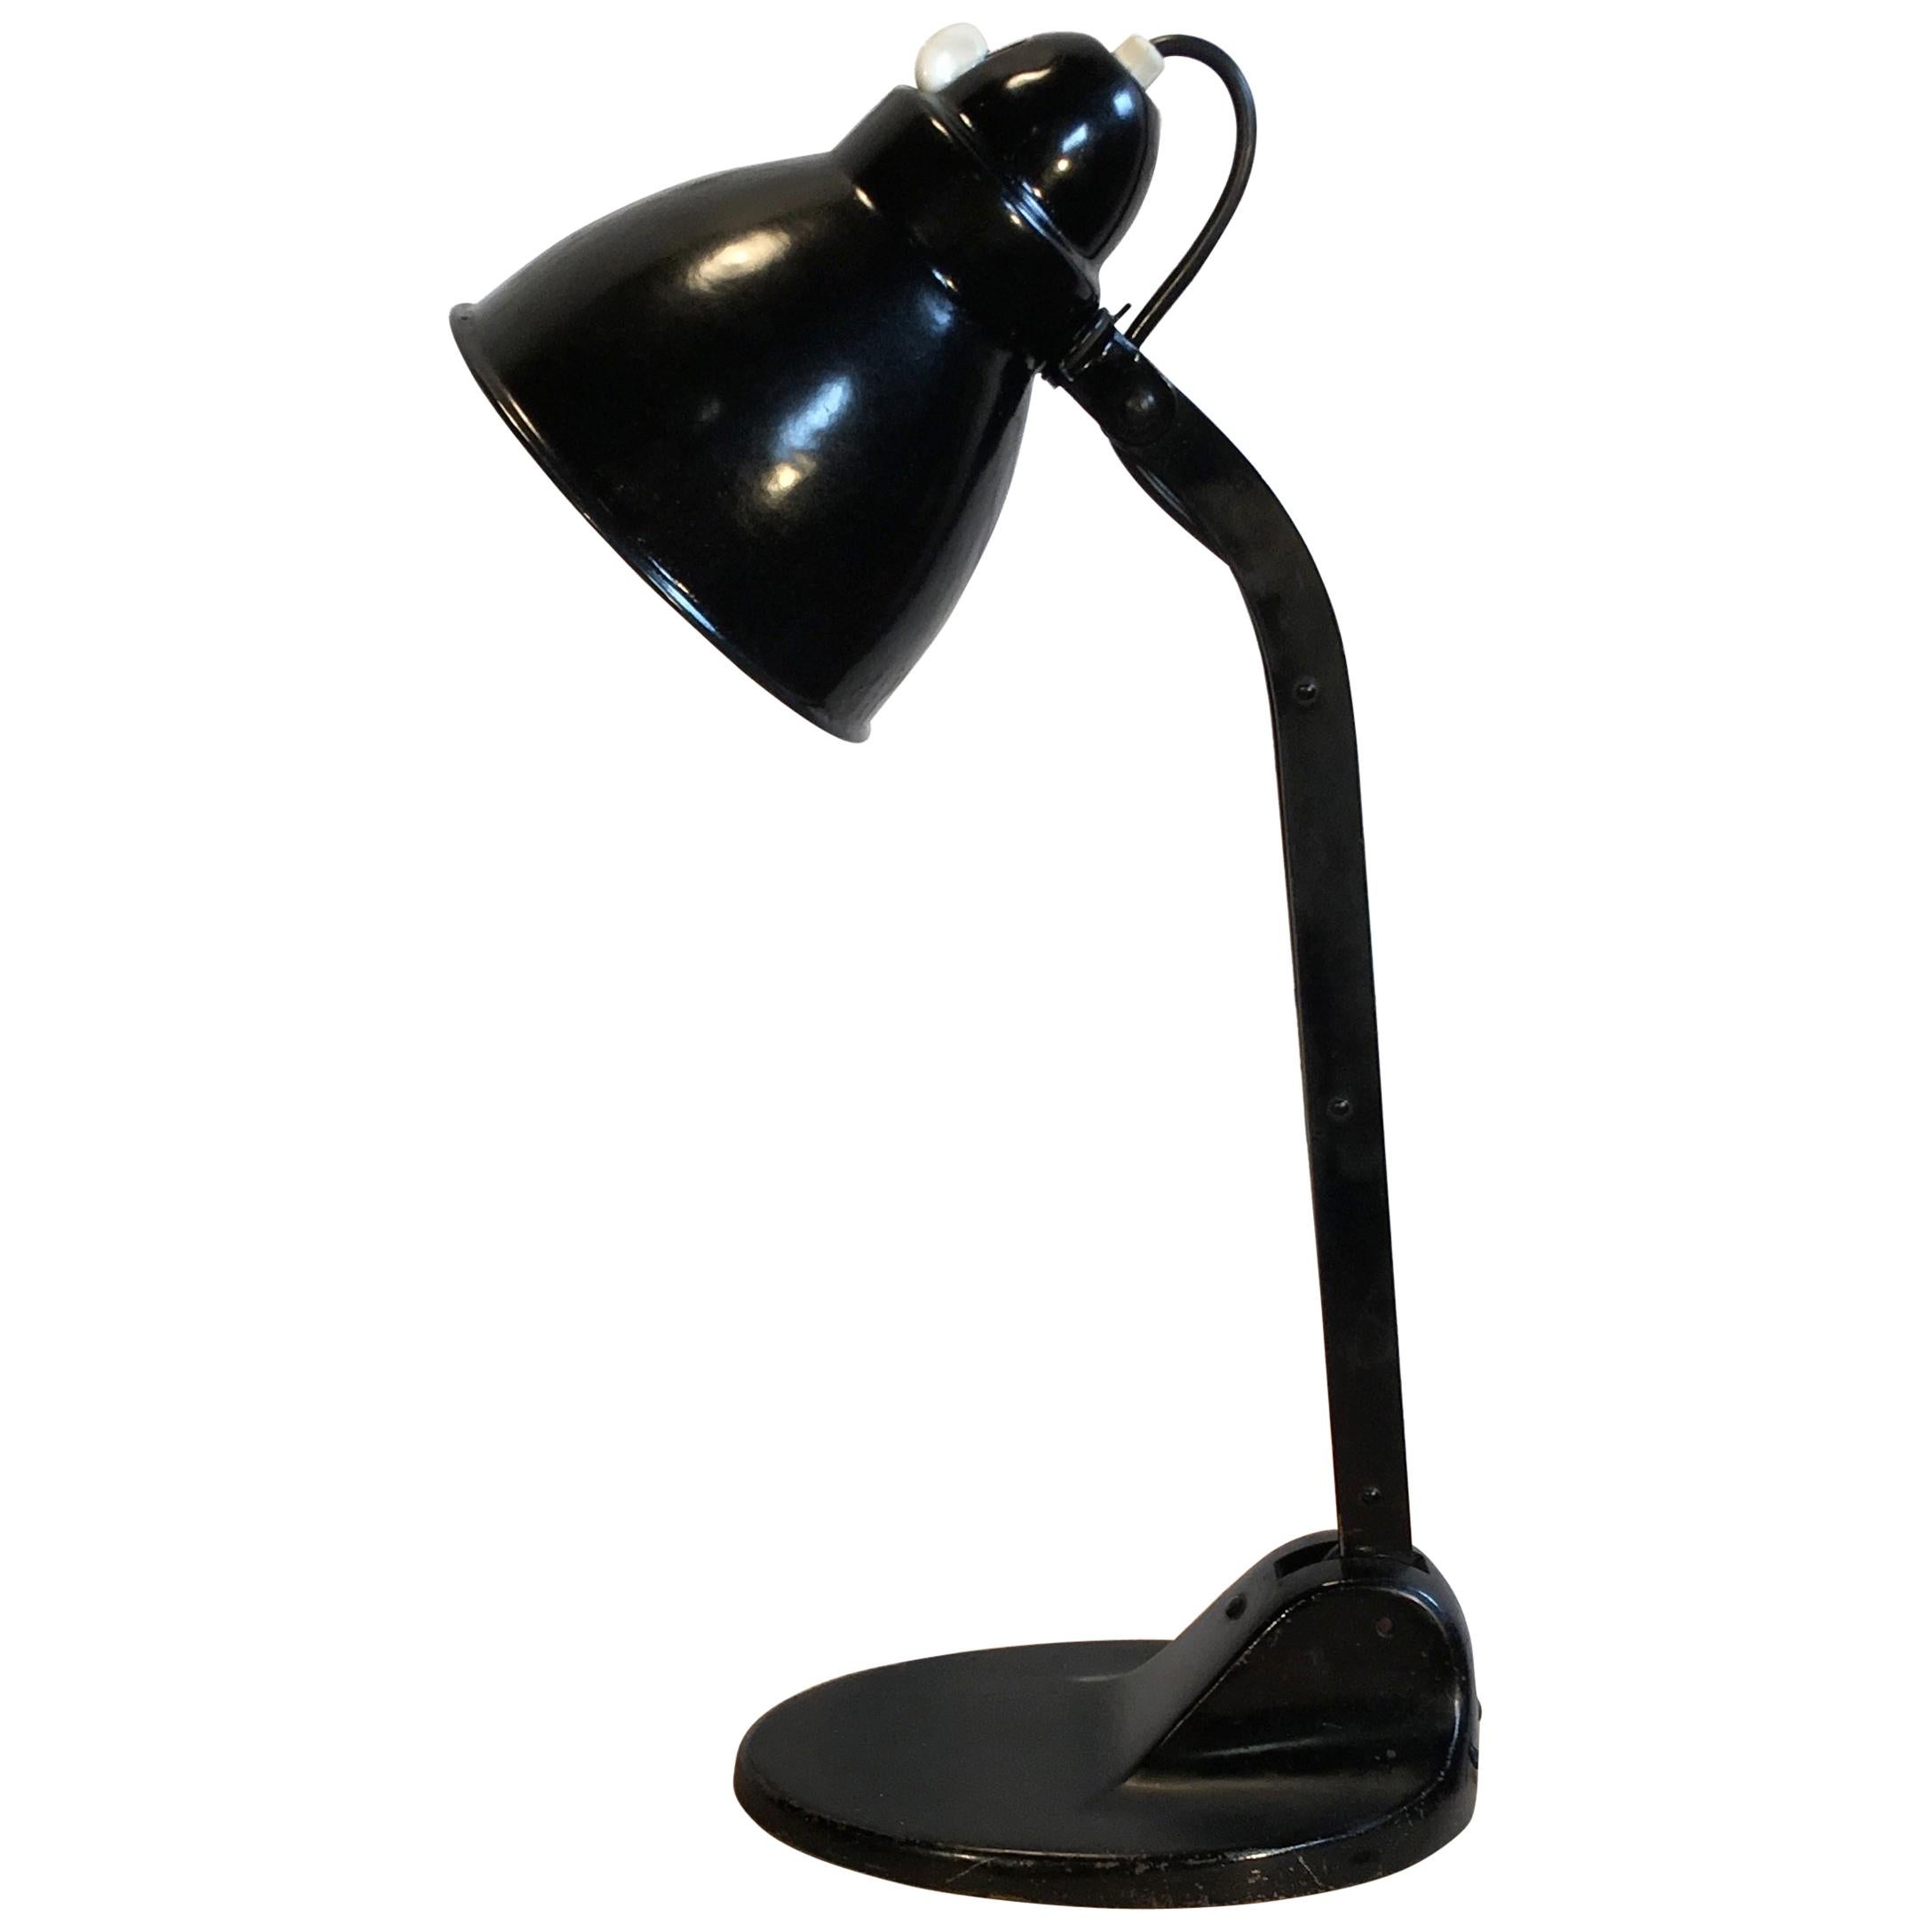 Black Enamel Industrial Table Lamp From Viktoria Lampe, 1930s